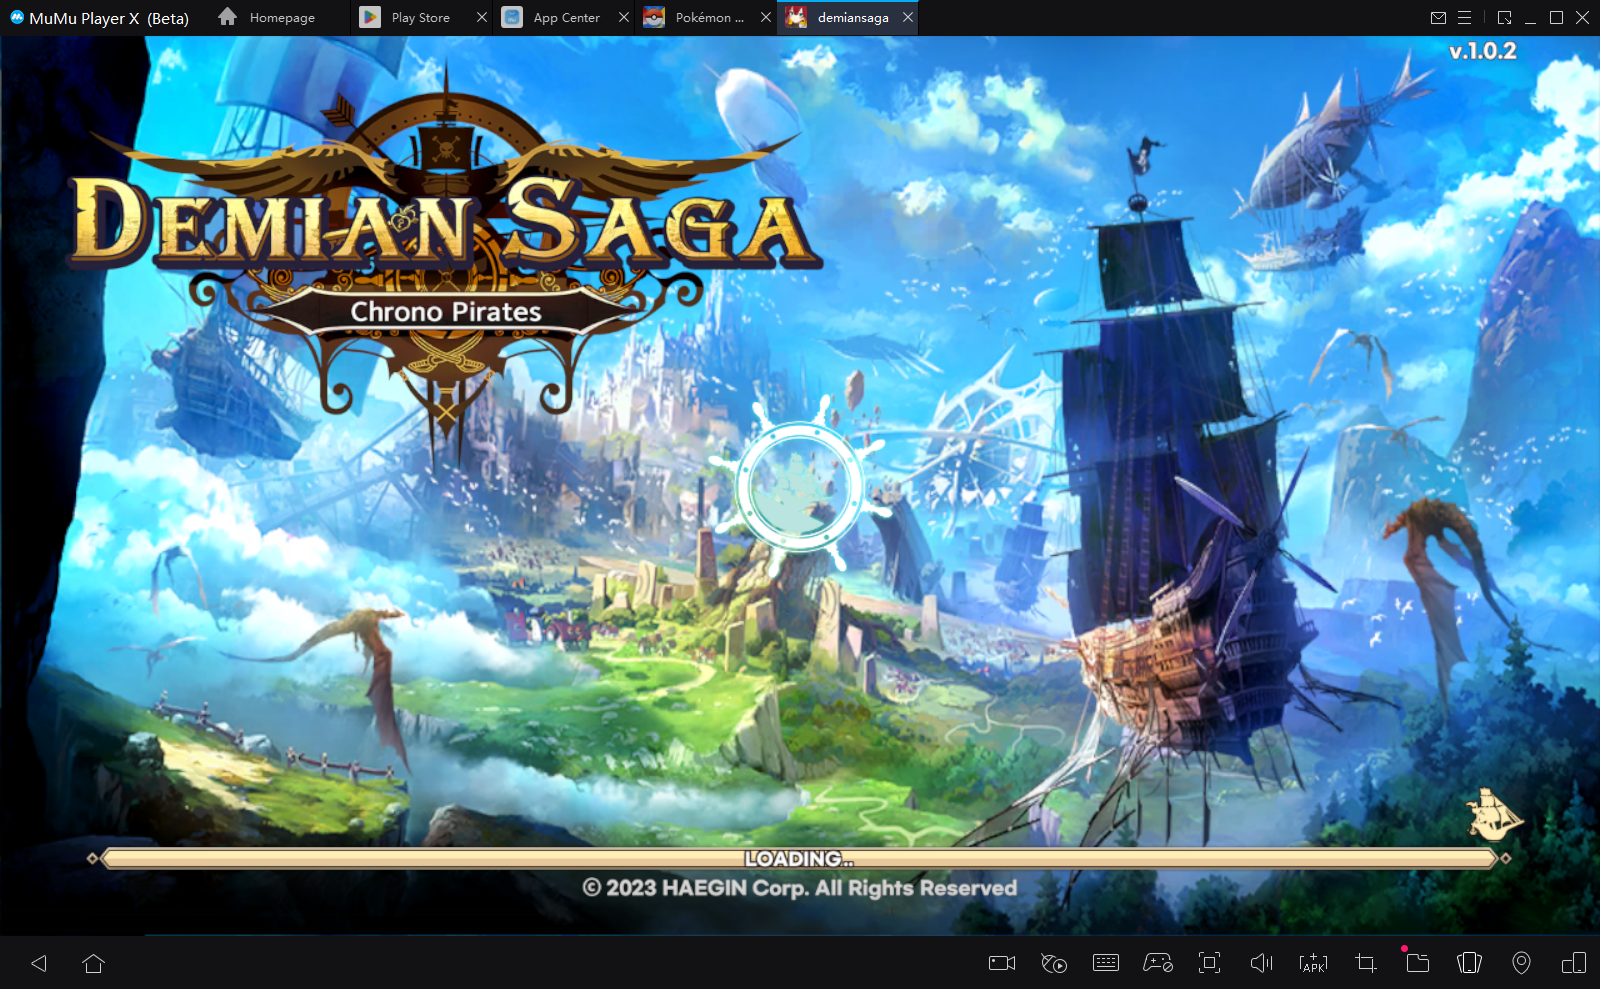 How to Play Demian Saga on PC